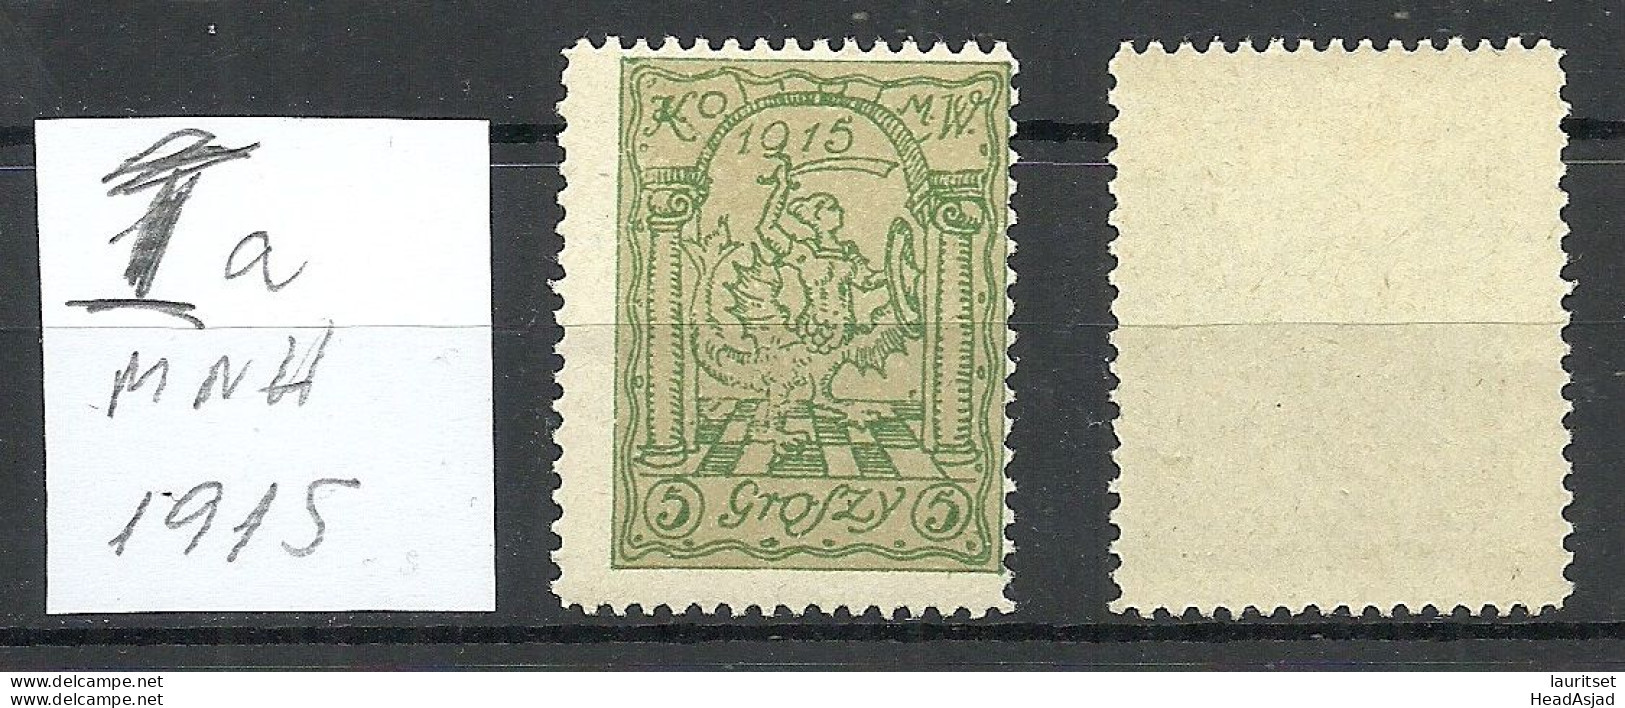 POLEN Poland 1915 Stadtpost Warschau Local City Post Michel 1 A MNH - Used Stamps